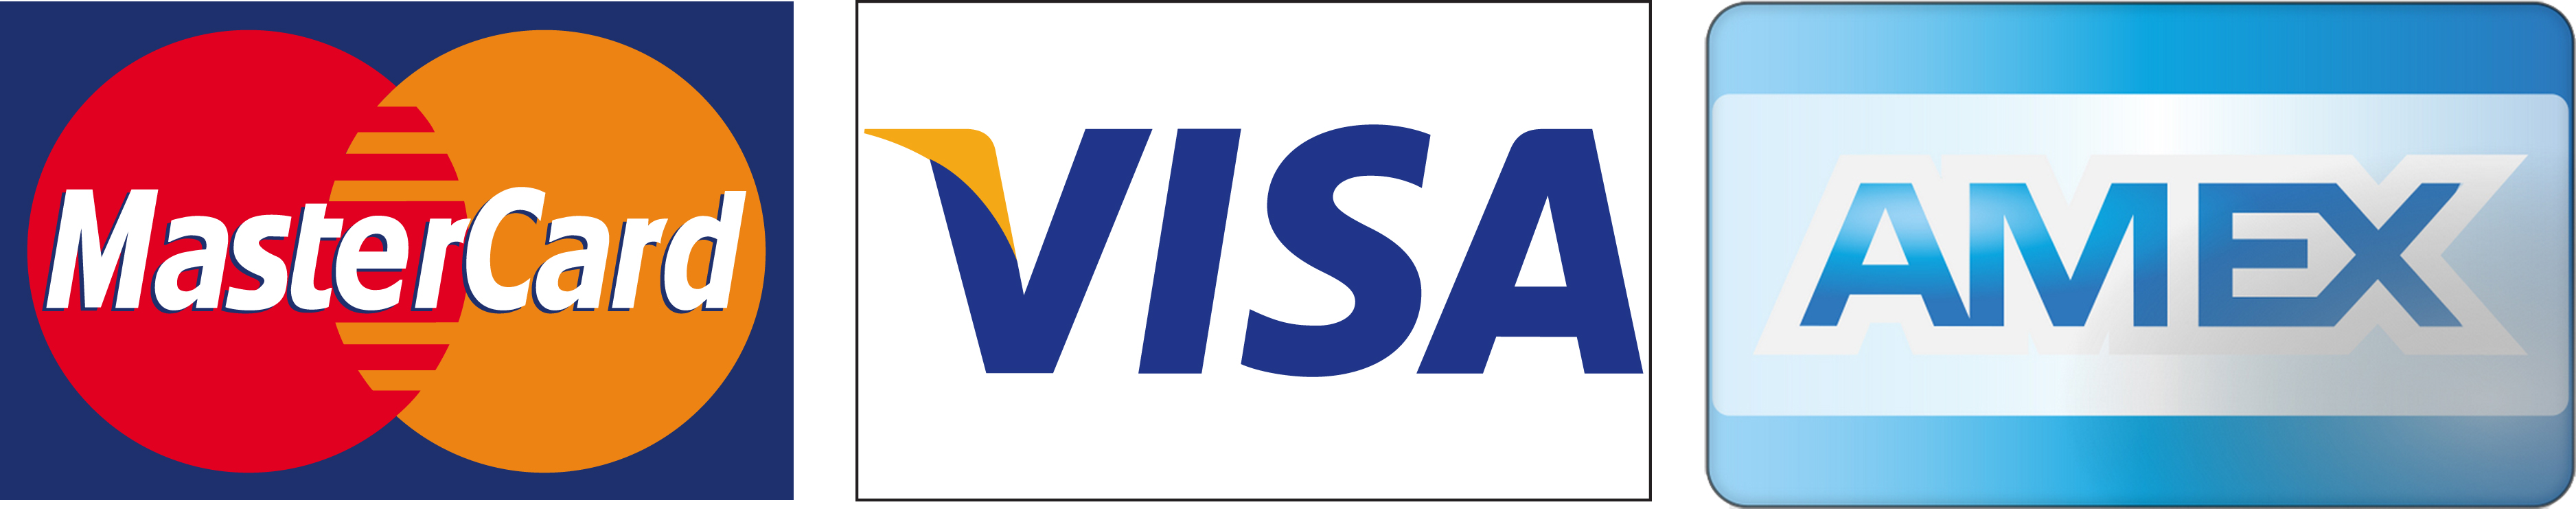 Mastercard, Visa, Amex Logo